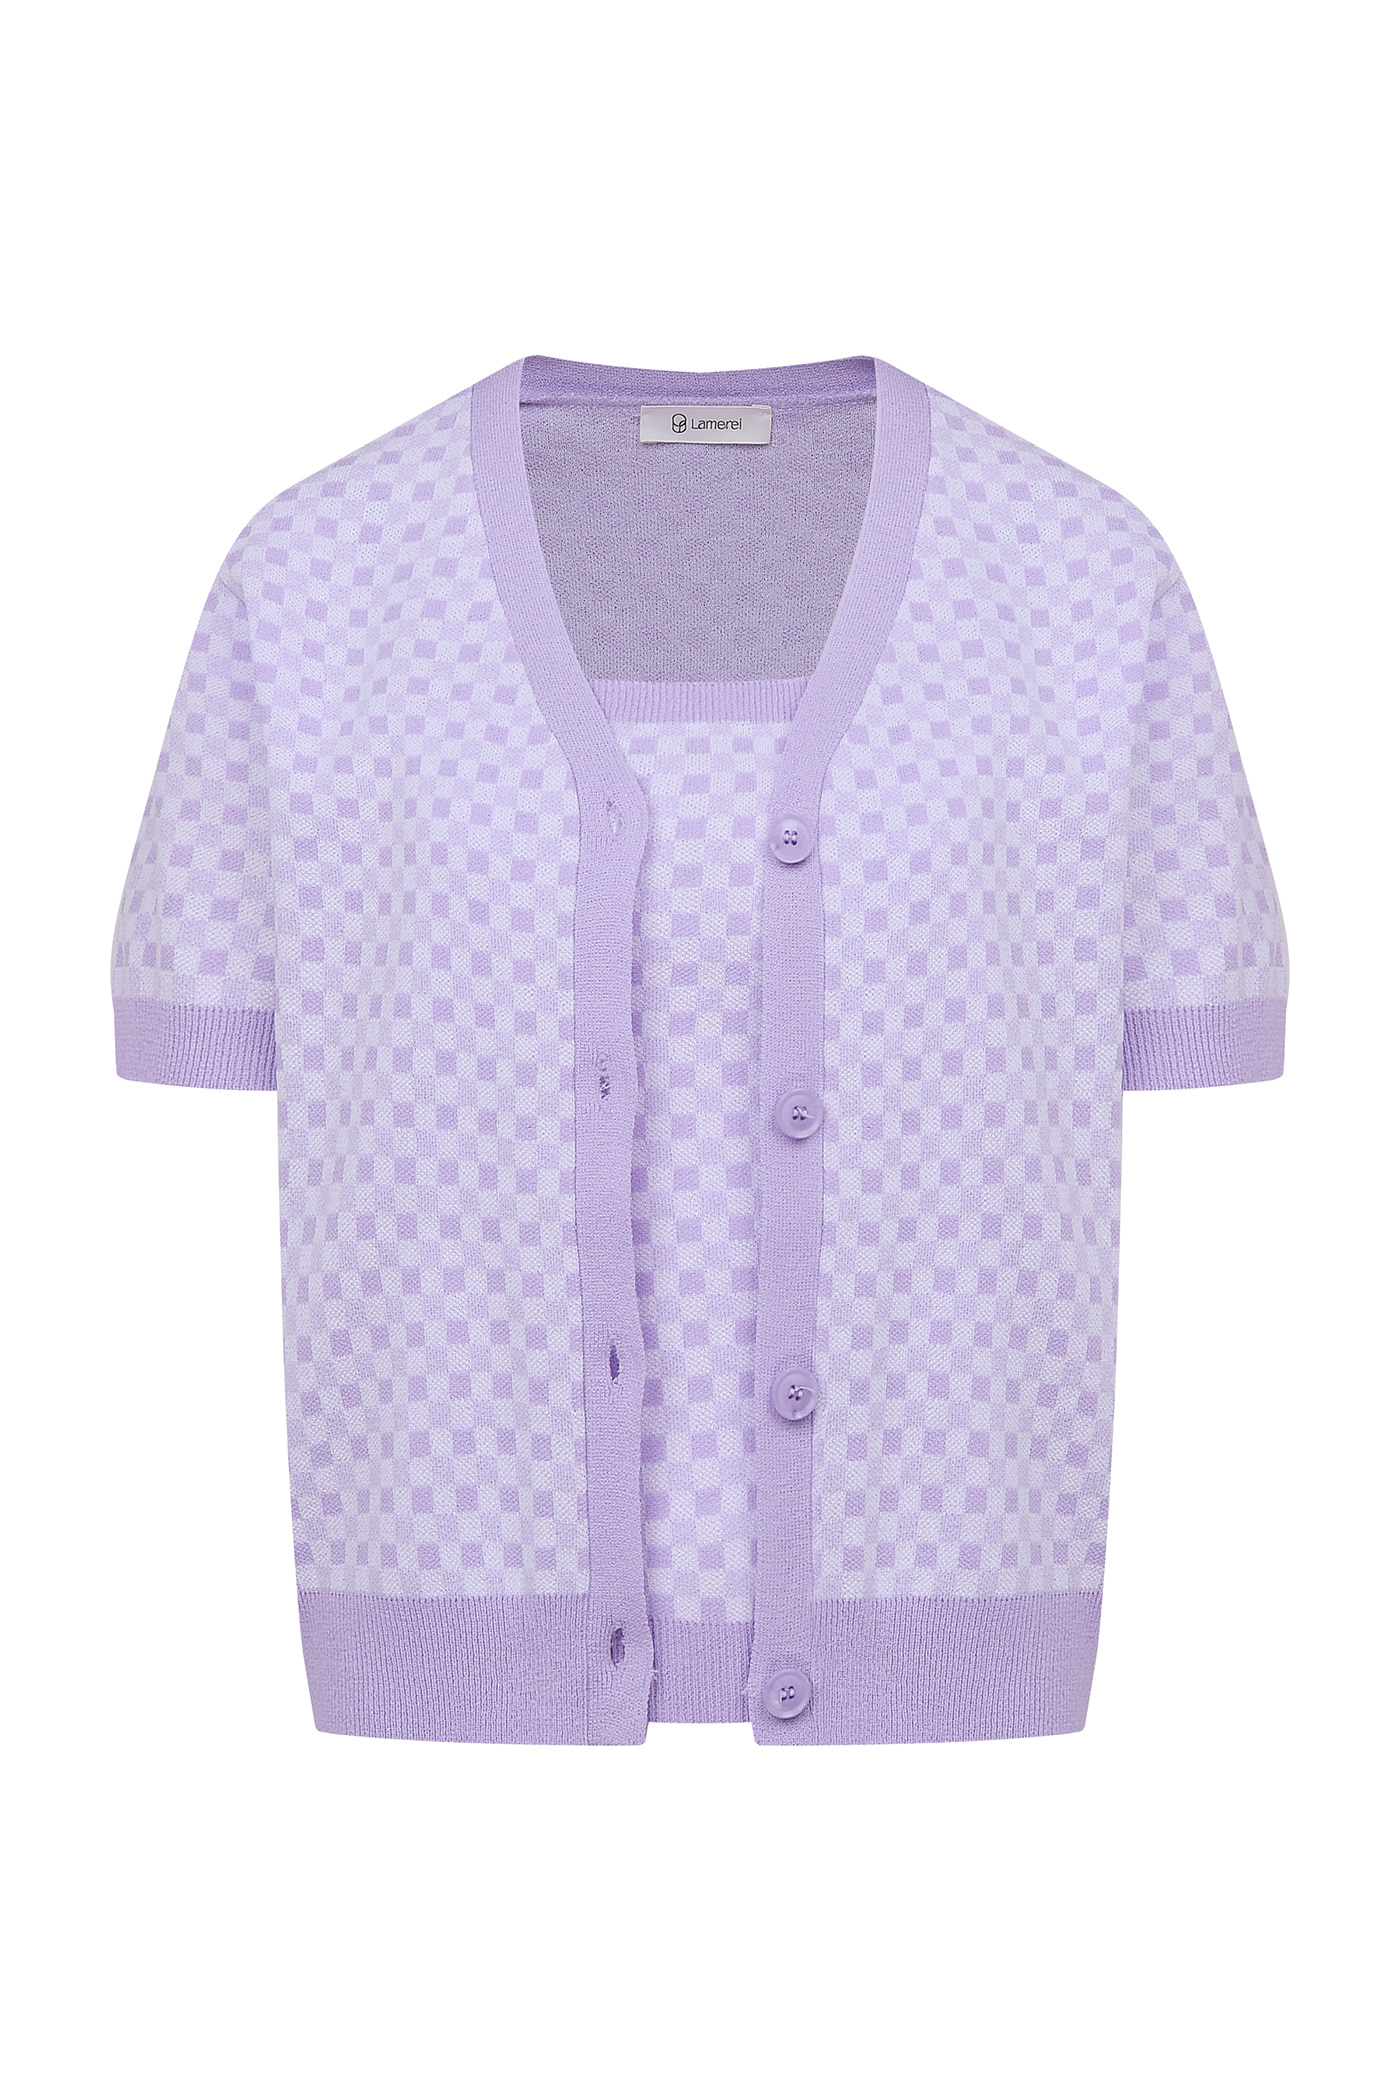 Gingham Check Sleeveless Knit Top-Light Purple